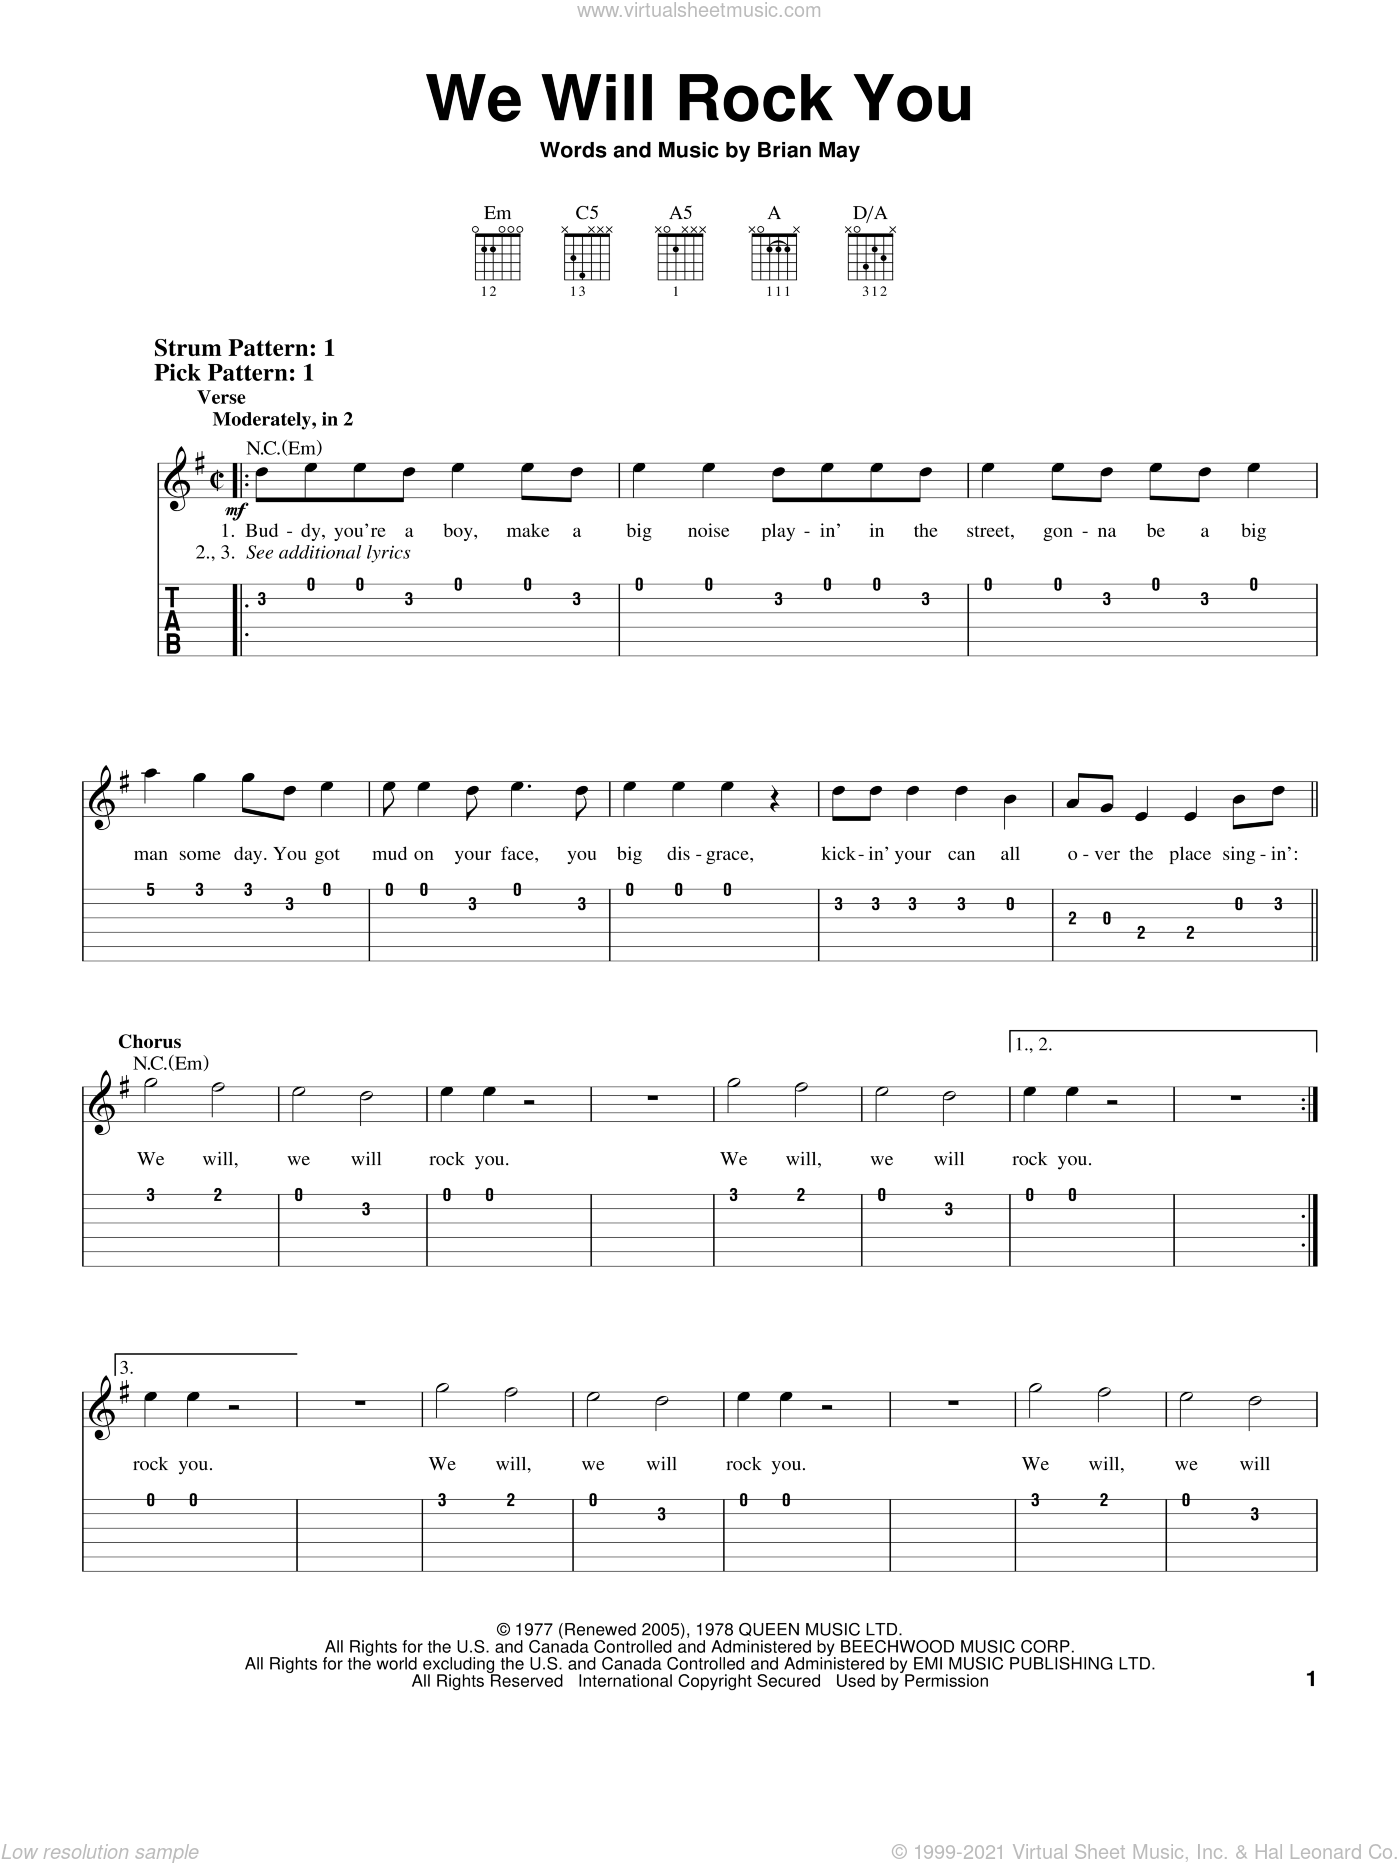 Free Printable Guitar Music Sheets